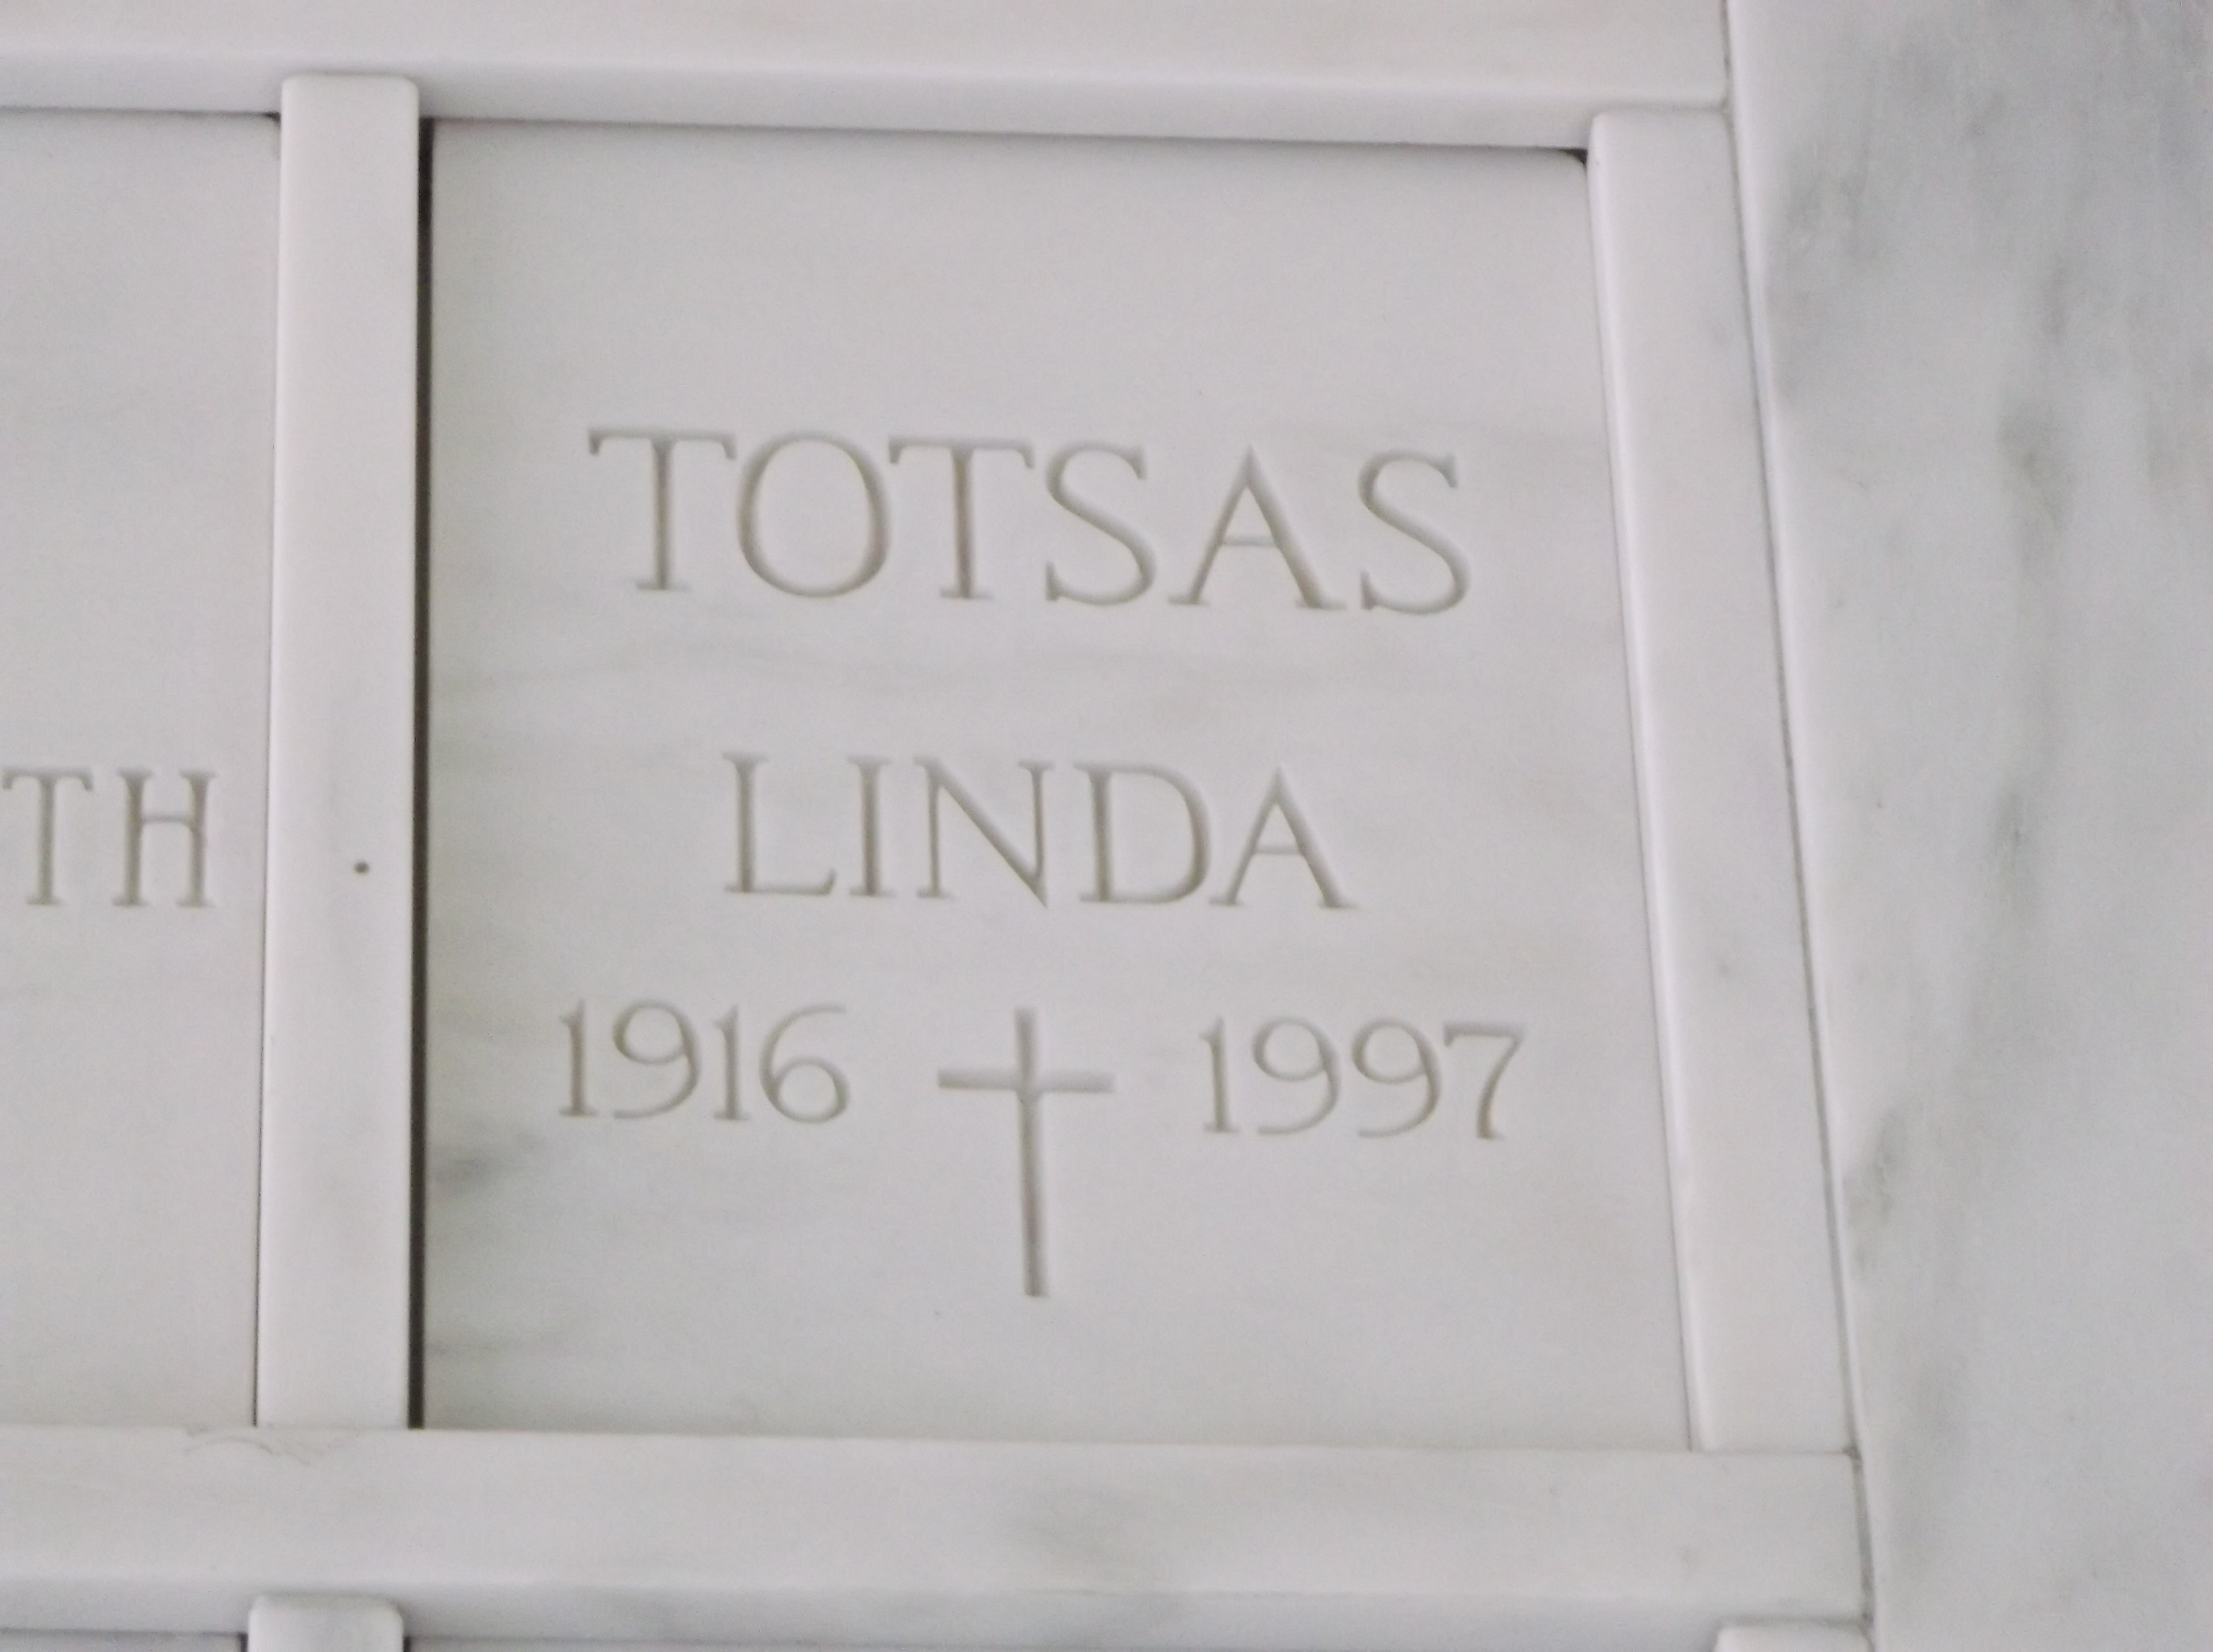 Linda Totsas